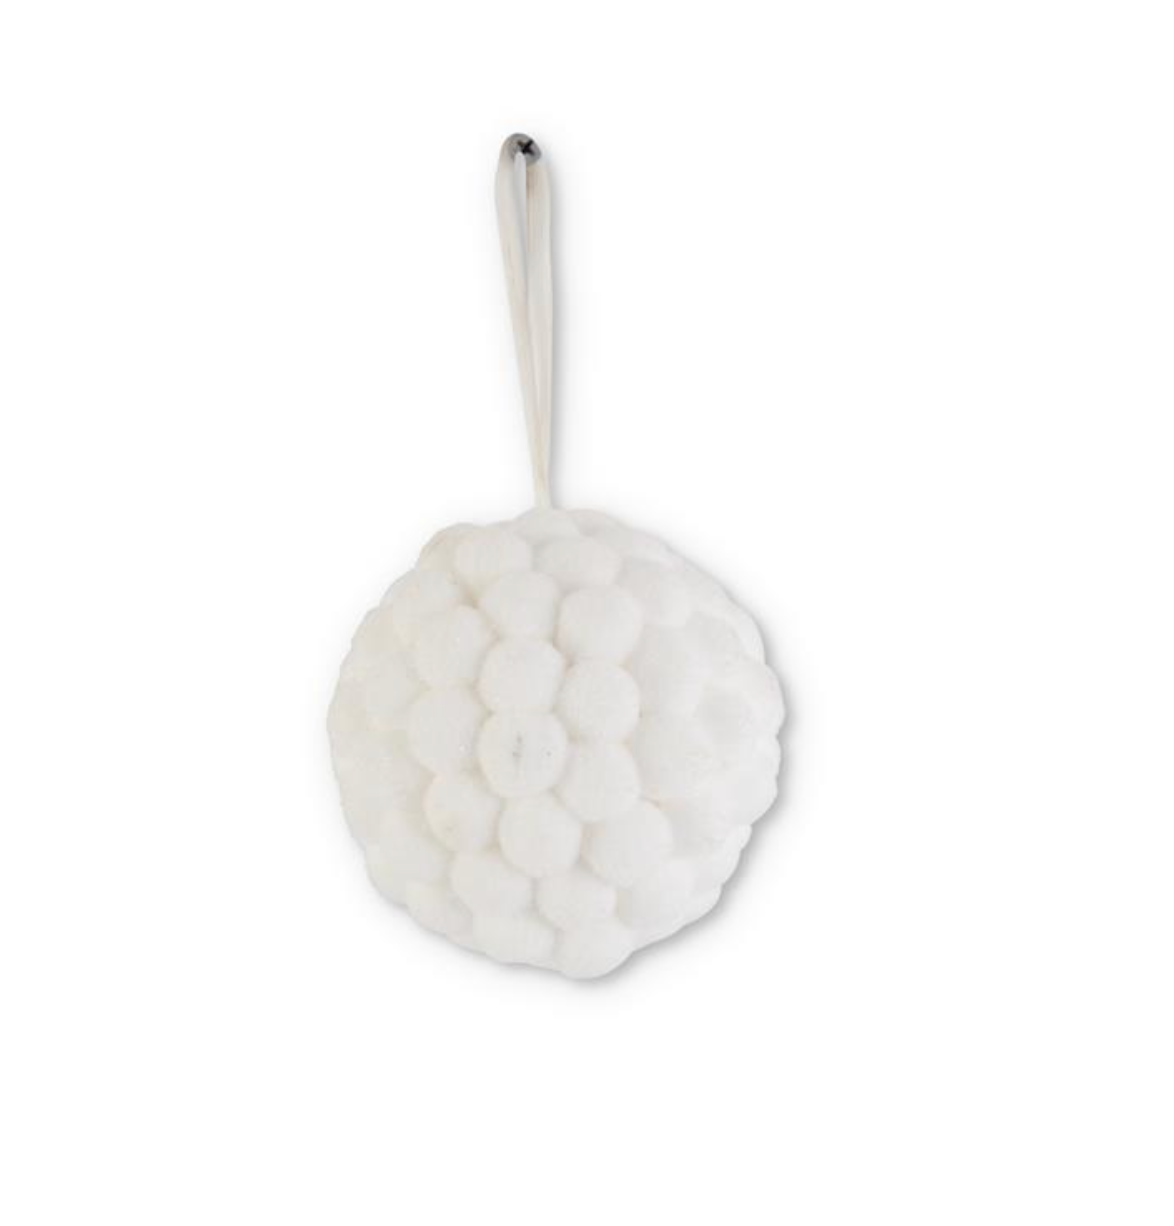 54442A 4" White PomPom Ball Ornament